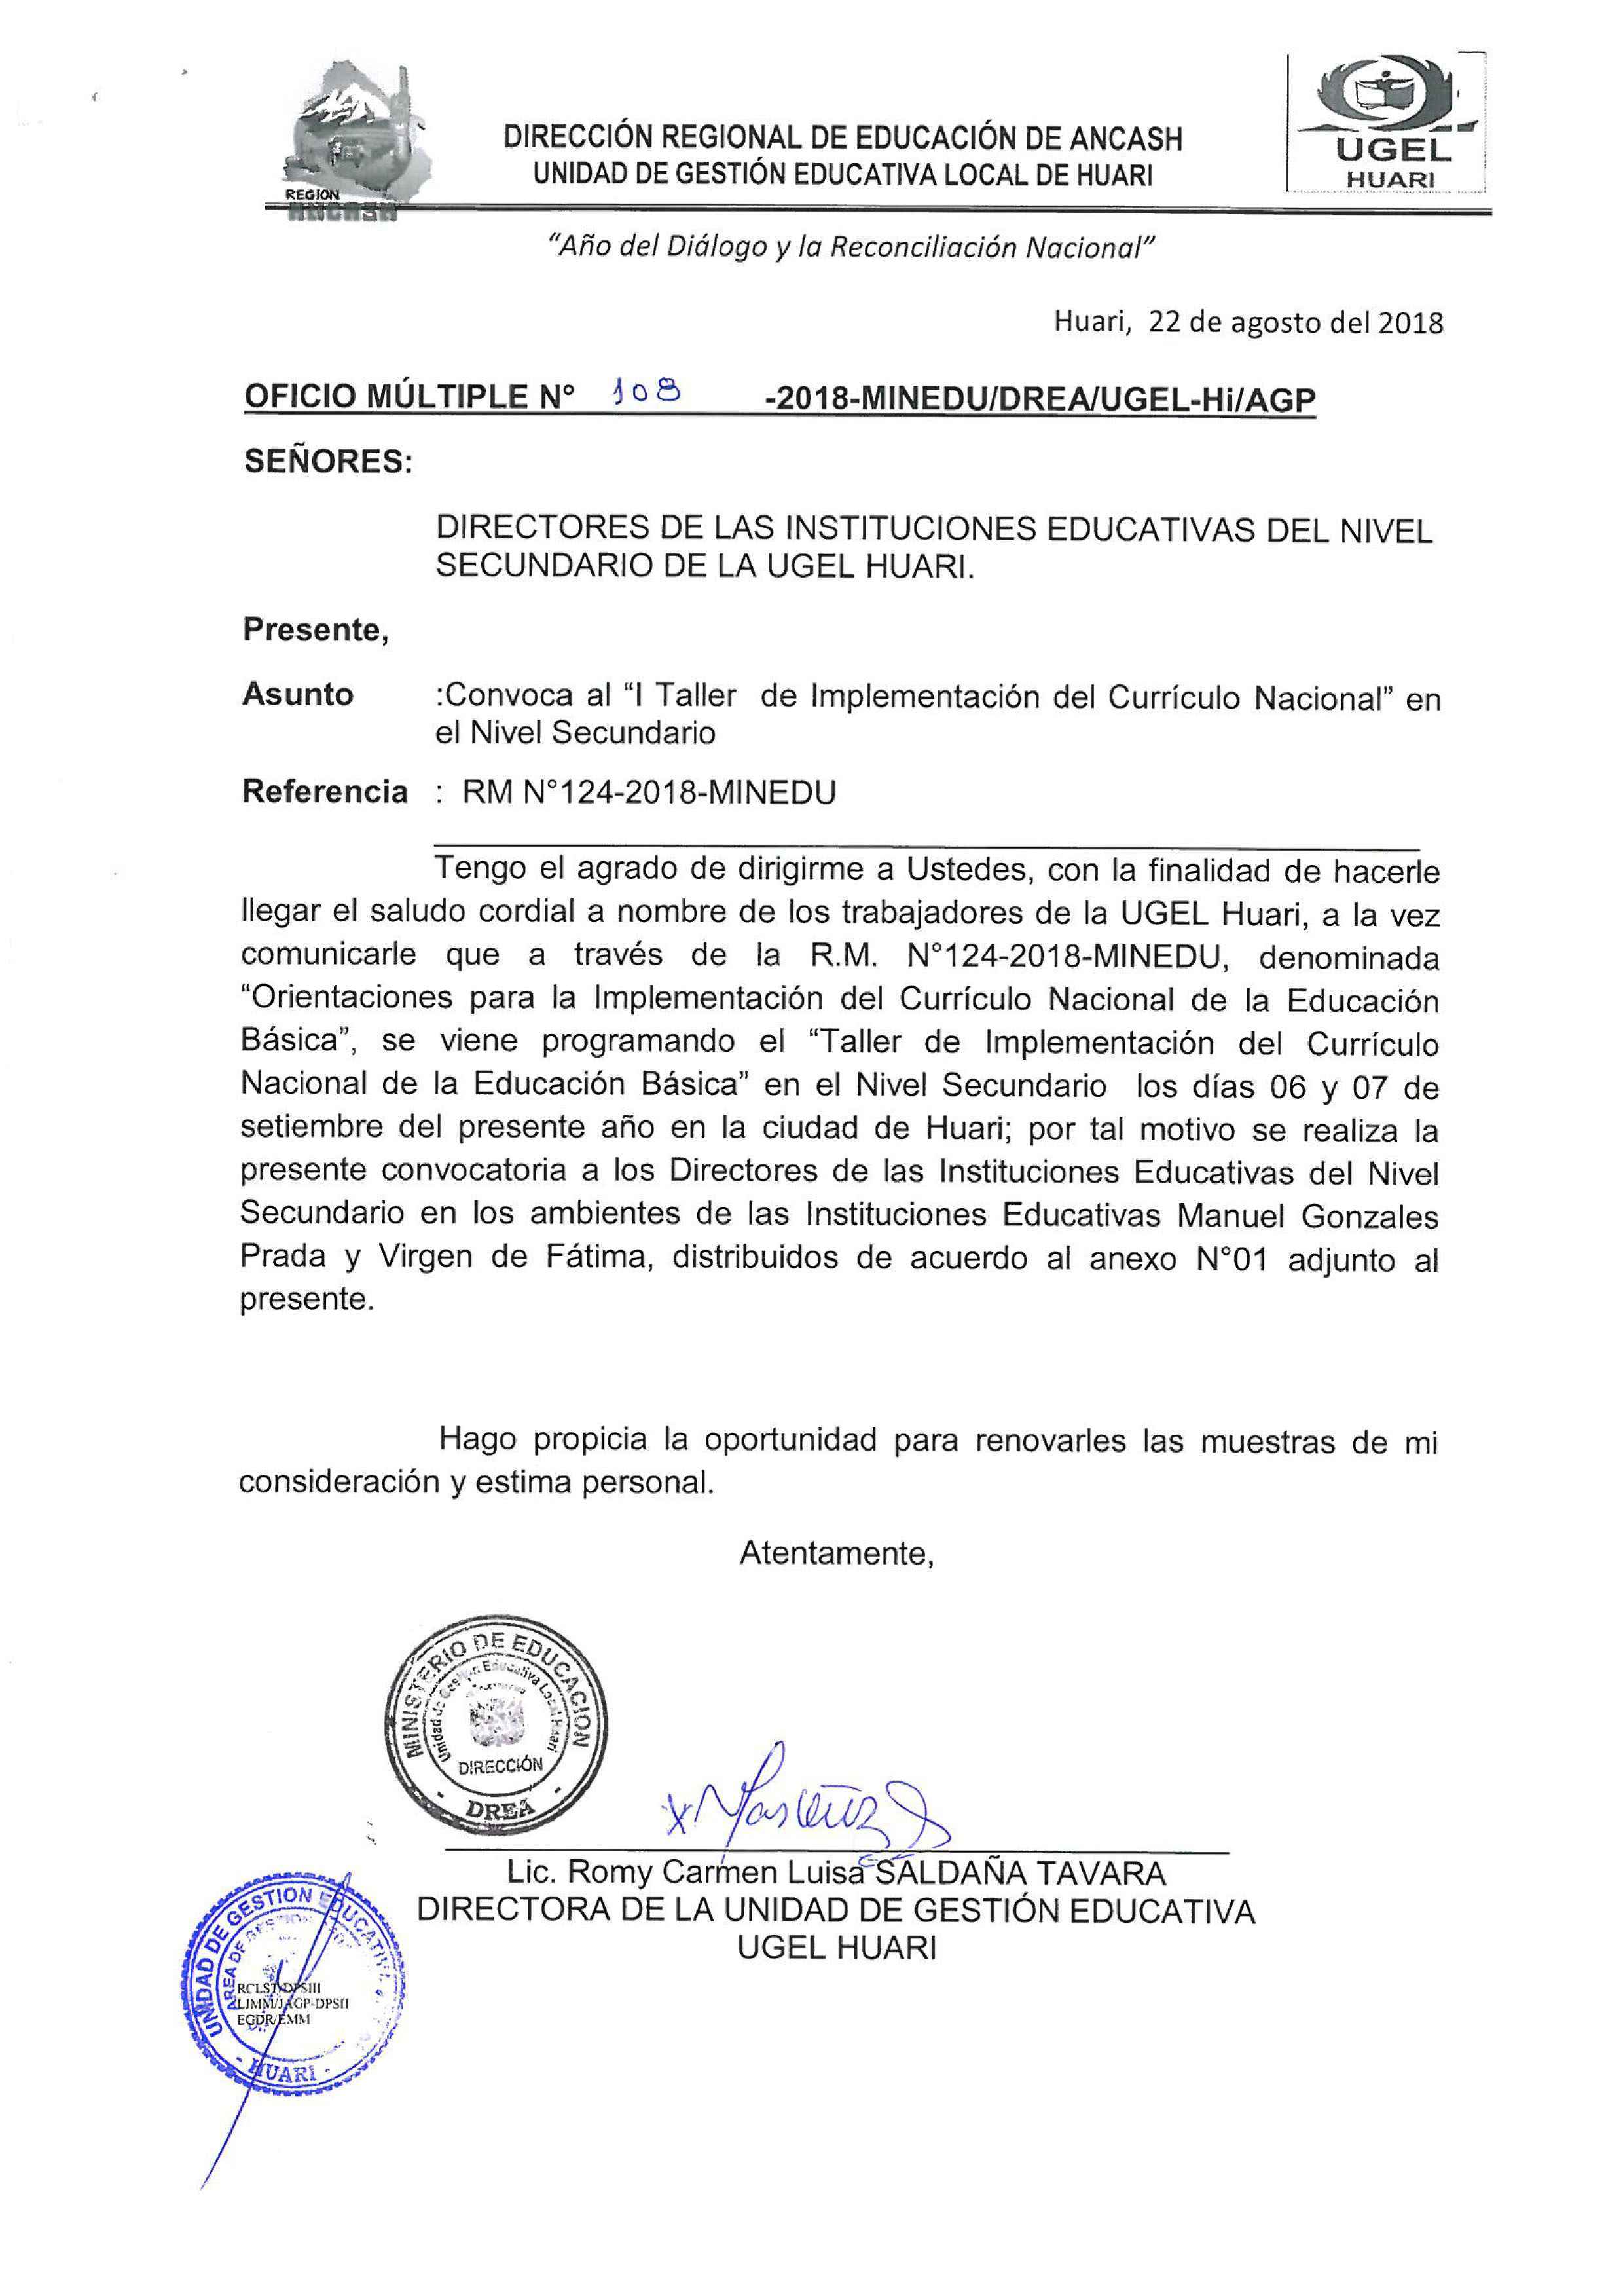 OFICIO PRIMER TALLER DE IMPLEMENTACIÓN DEL CURRÍCULO NACIONAL-NIVEL SECUNDARIA